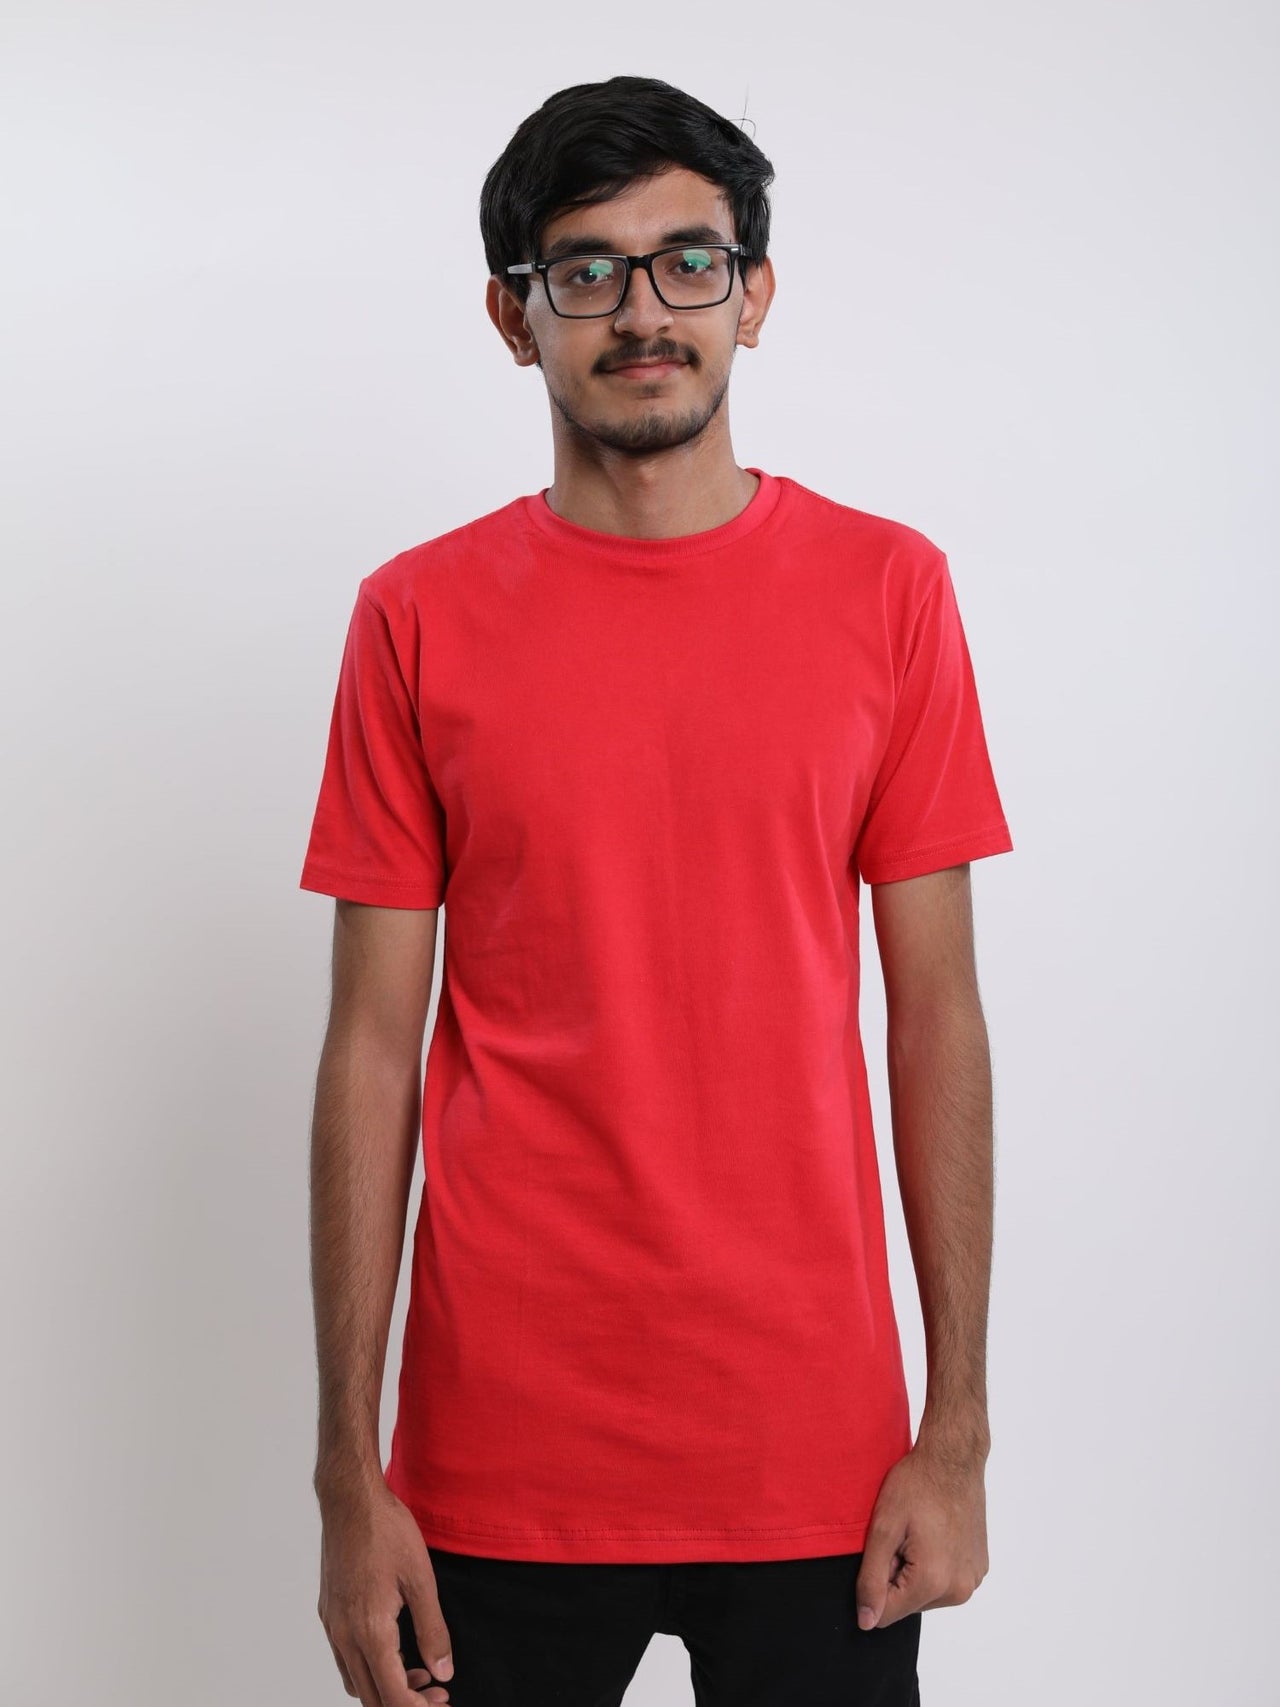 A tall skinny guy wearing red tall slim t-shirt